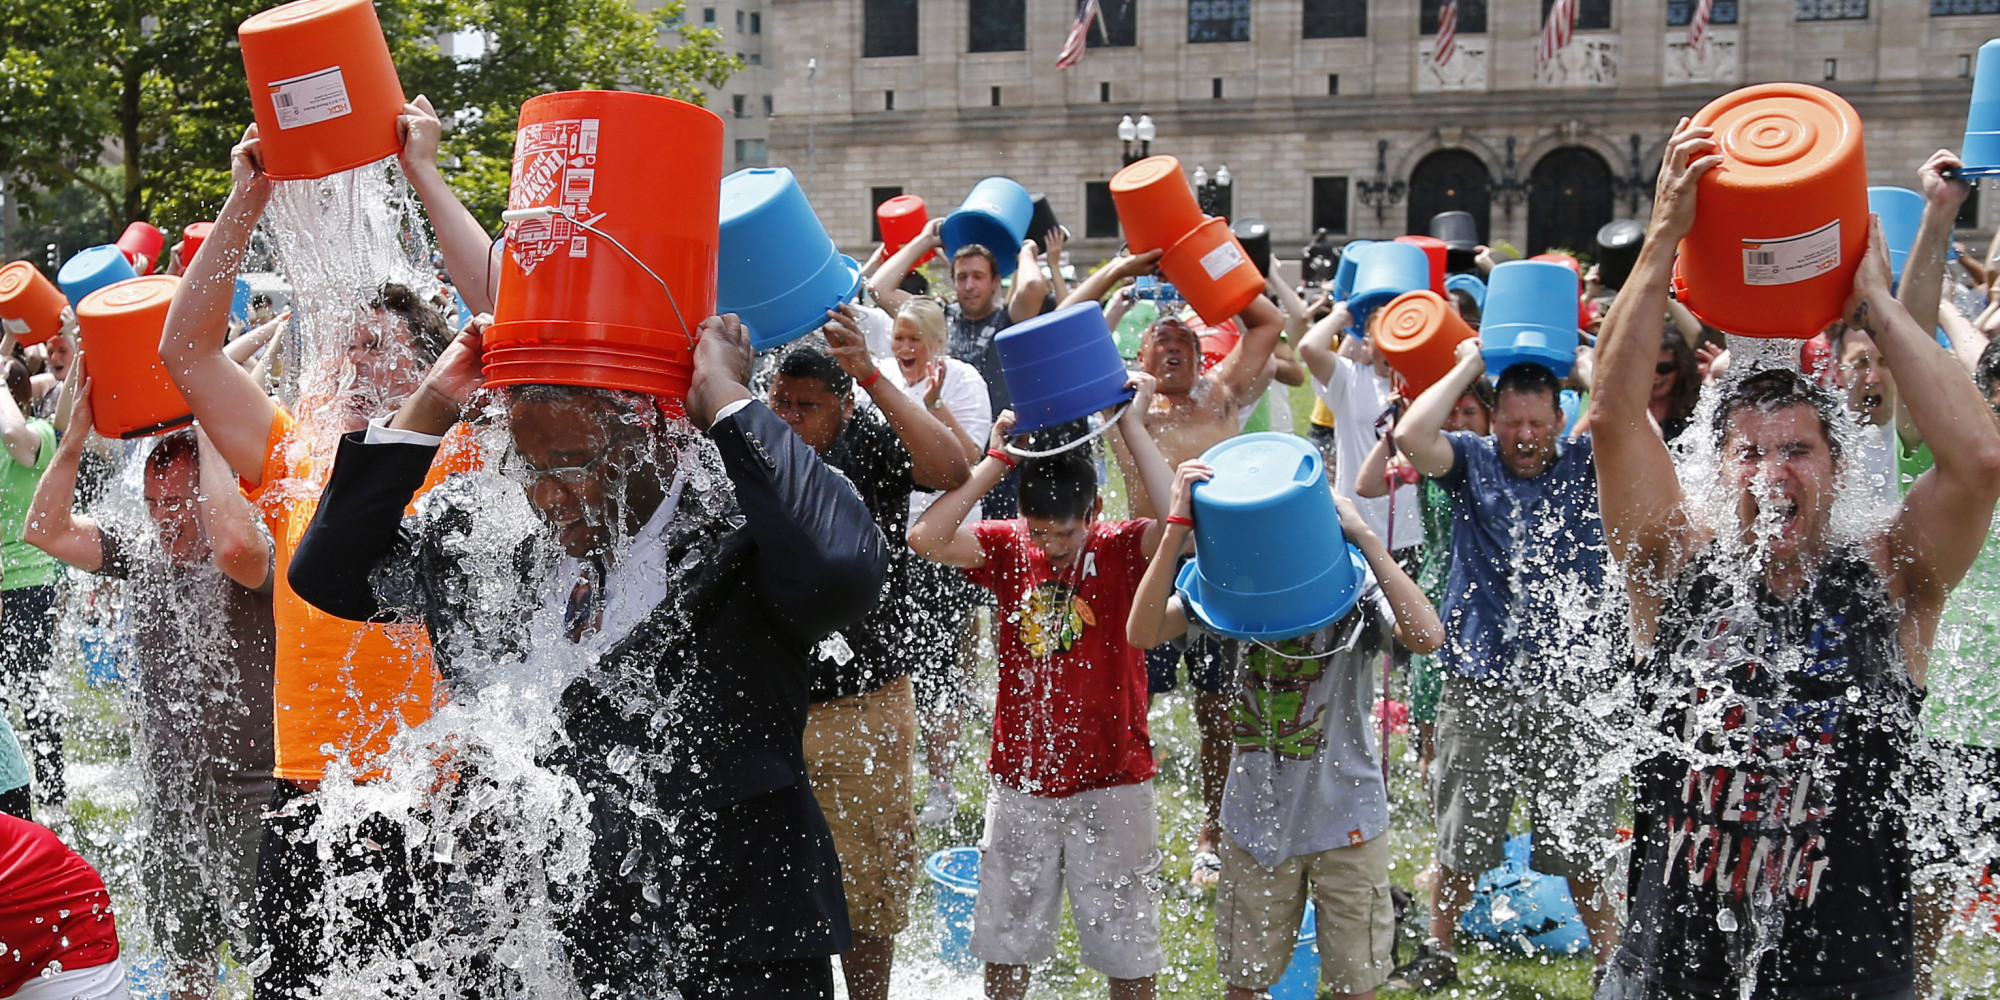 The ALS Association ice bucket challenge